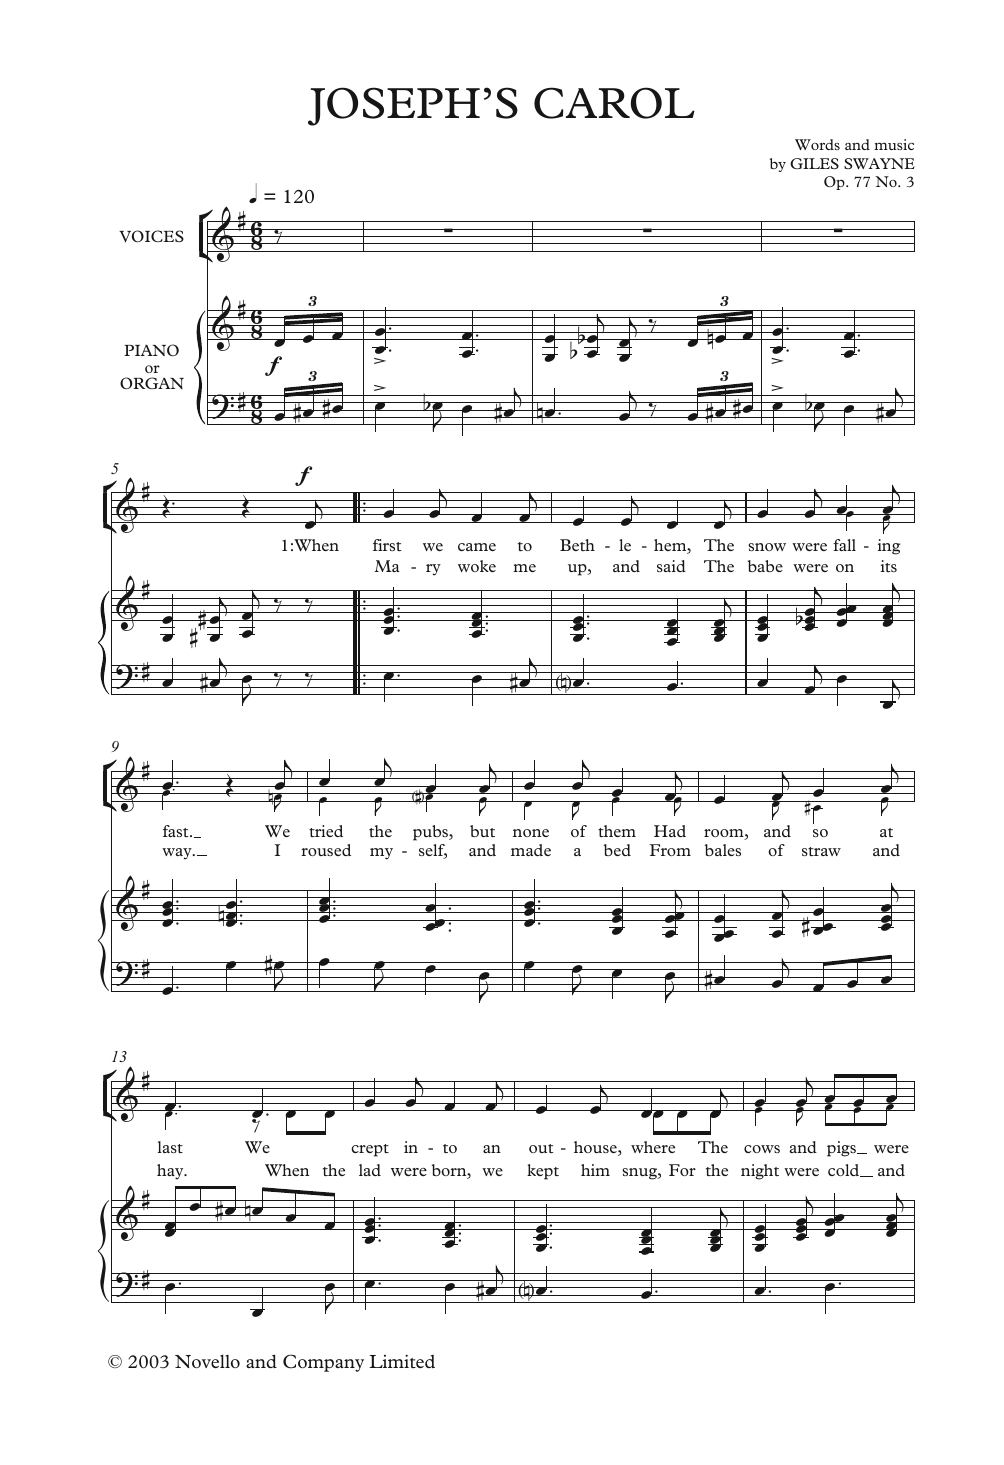 Giles Swayne Joseph's Carol Sheet Music Notes & Chords for 2-Part Choir - Download or Print PDF